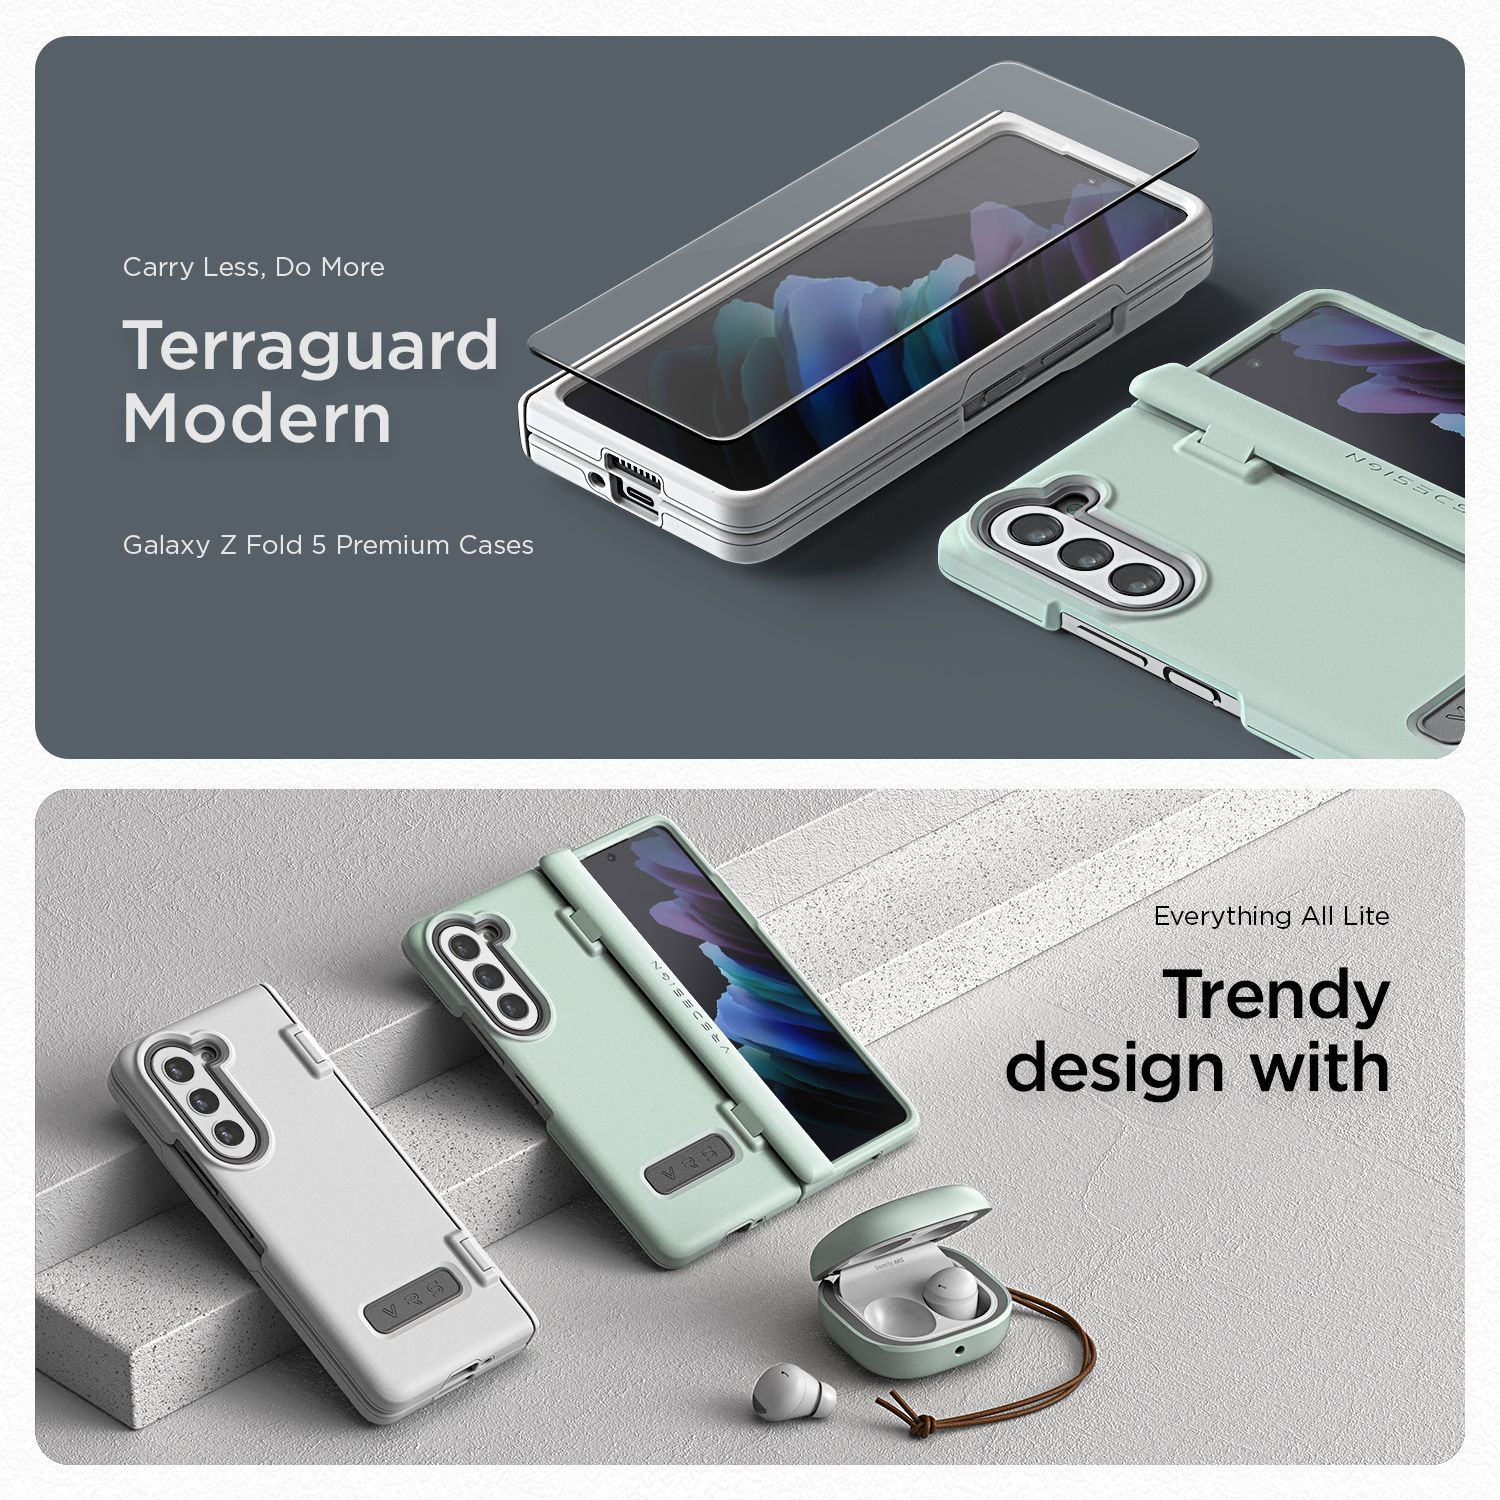 VRS รุ่น Terra Guard Modern - เคส Galaxy Z Fold 5 - สี Marine Green (แถมฟิล์มหน้าจอ)